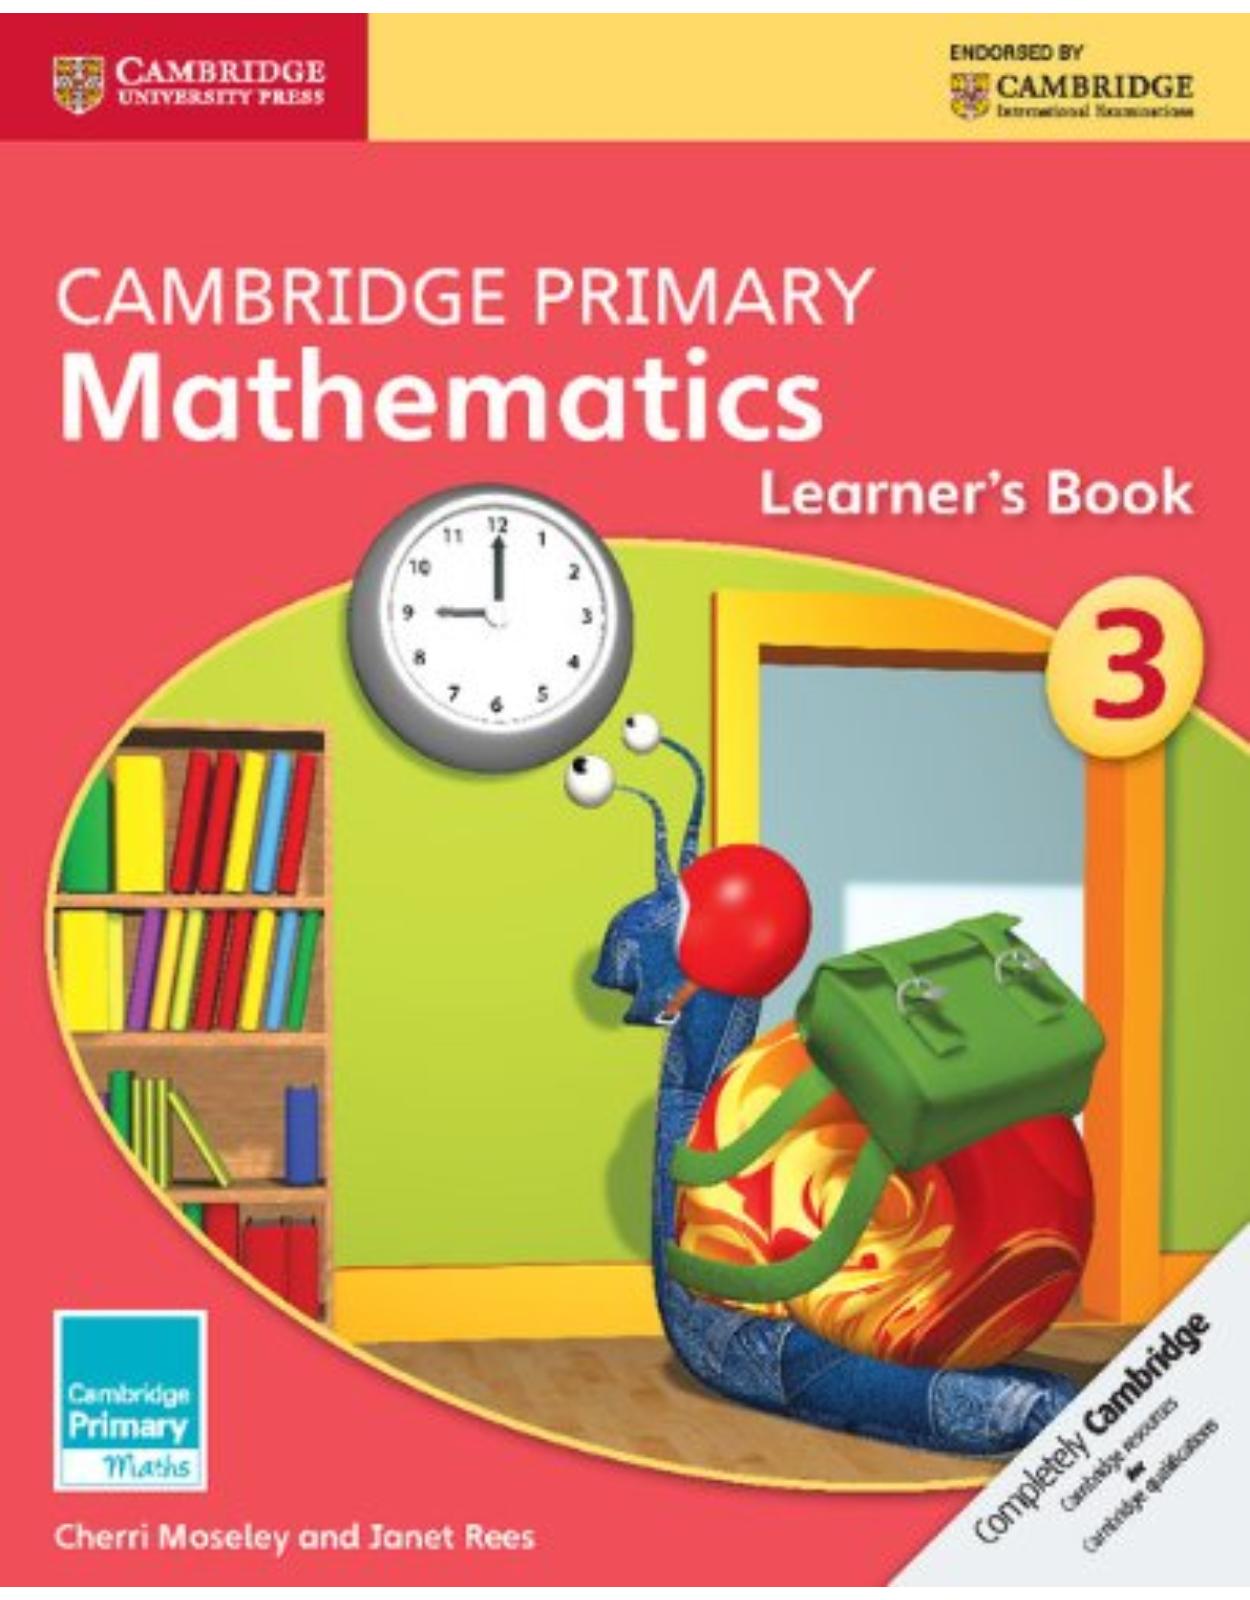 Cambridge Primary Mathematics Stage 3 Learner’s Book (Cambridge International Examinations)